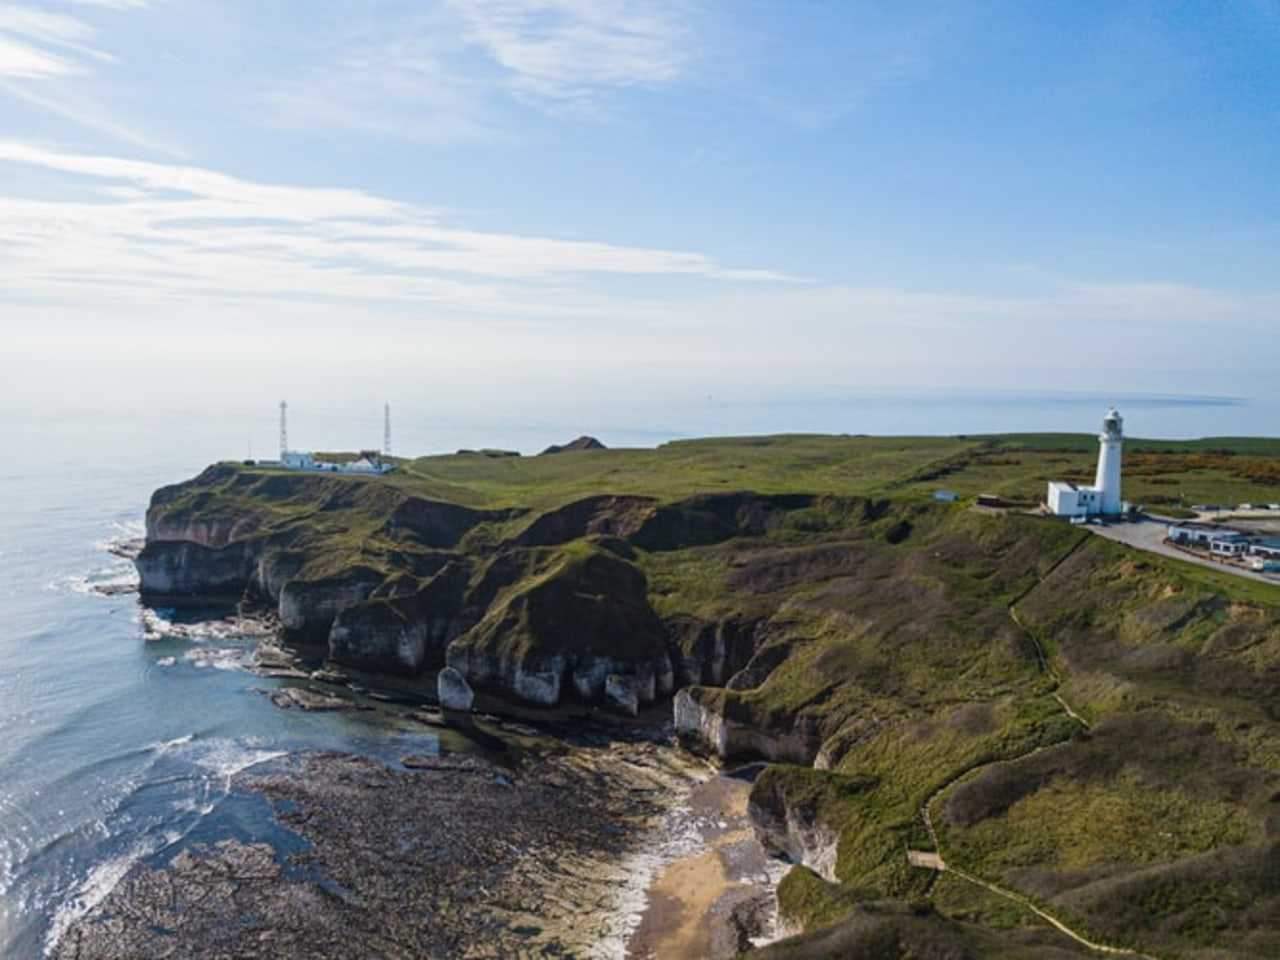 Lighthouse at Flamborough Head